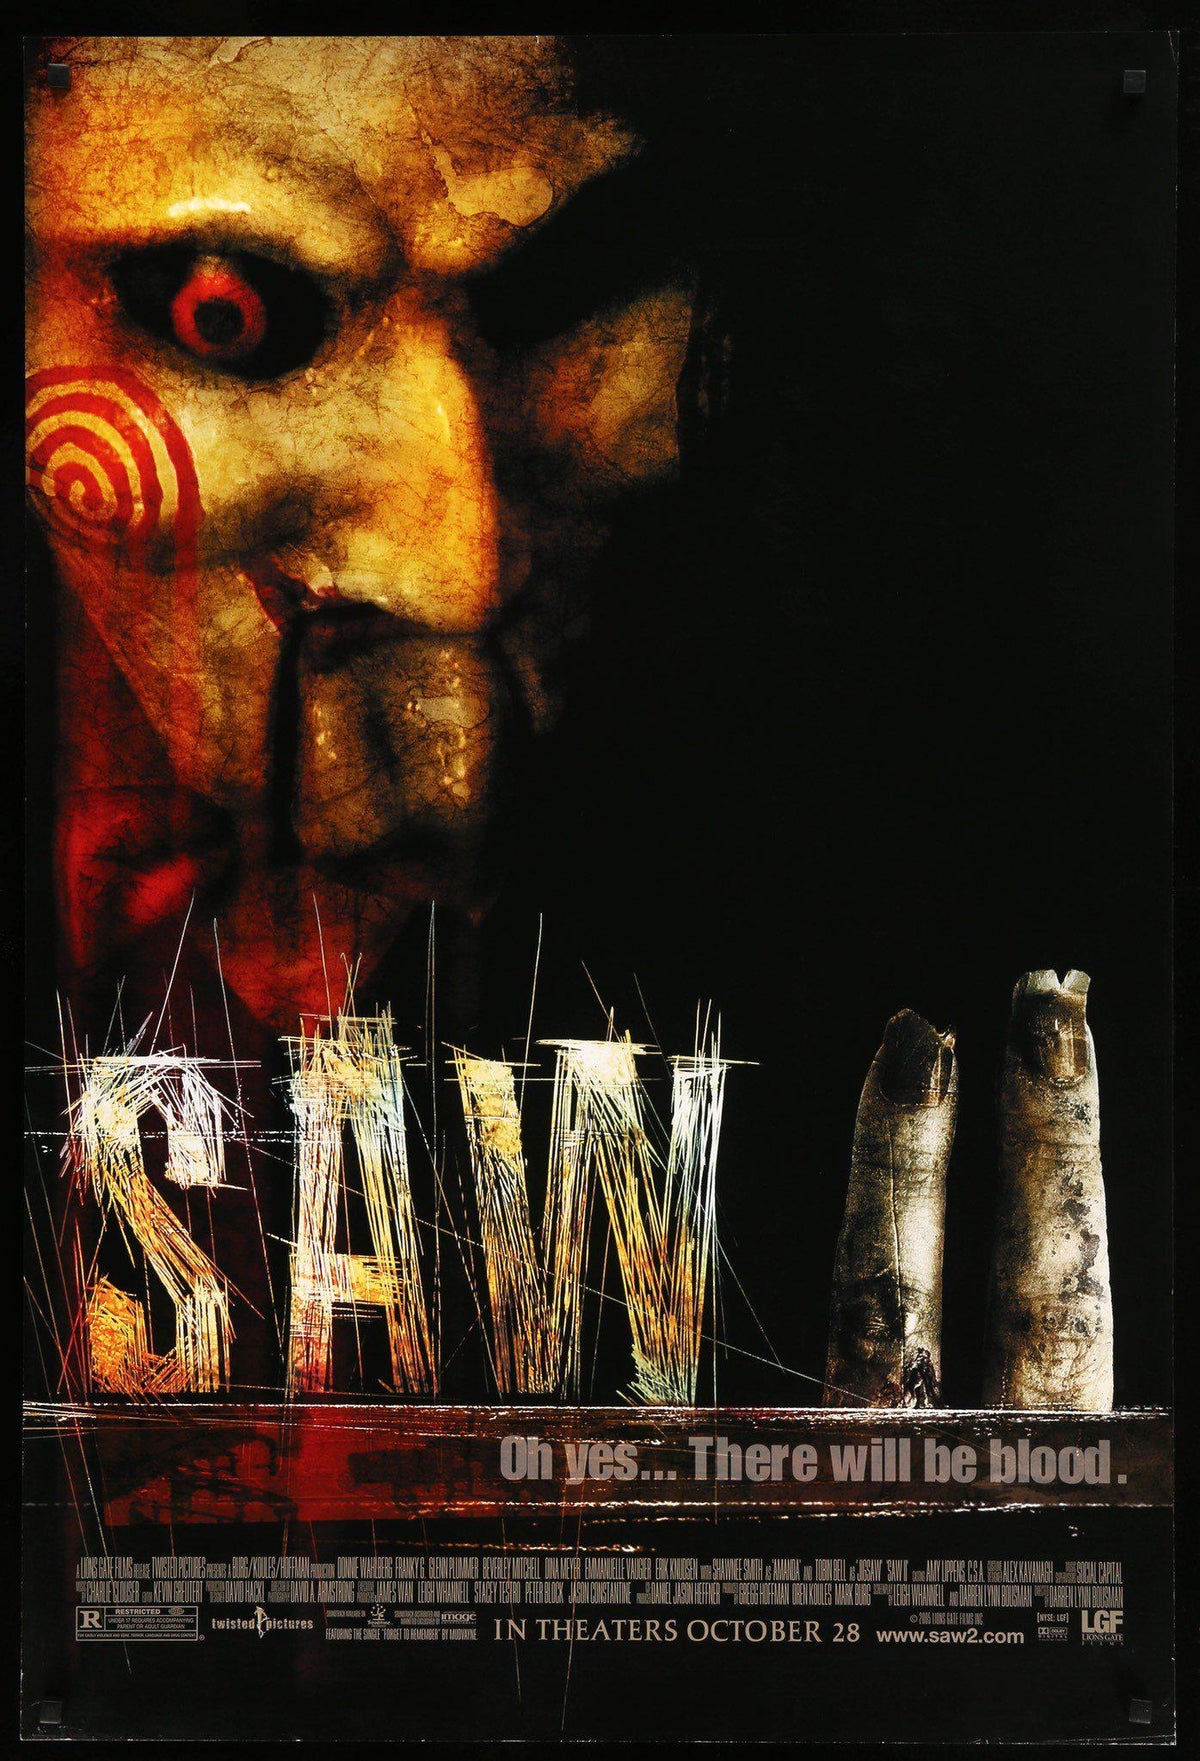 Saw II (2005) original movie poster for sale at Original Film Art